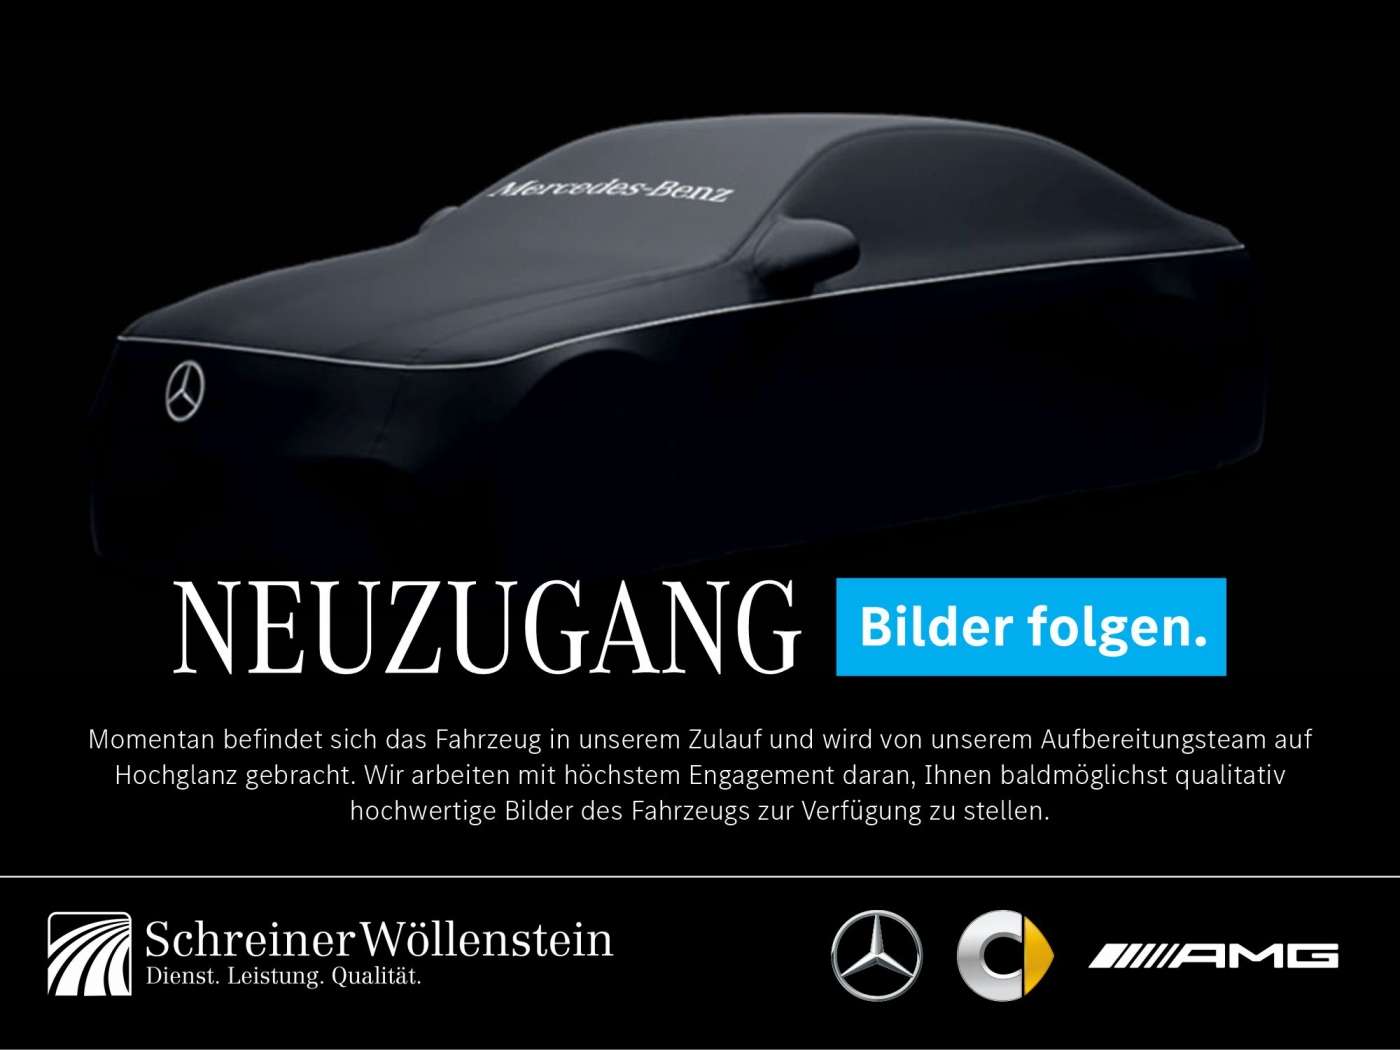 Mercedes-Benz GLC 300 Off-Road/Pick-up in Black employee's car in Landshut / Ergolding for € 63,990.-